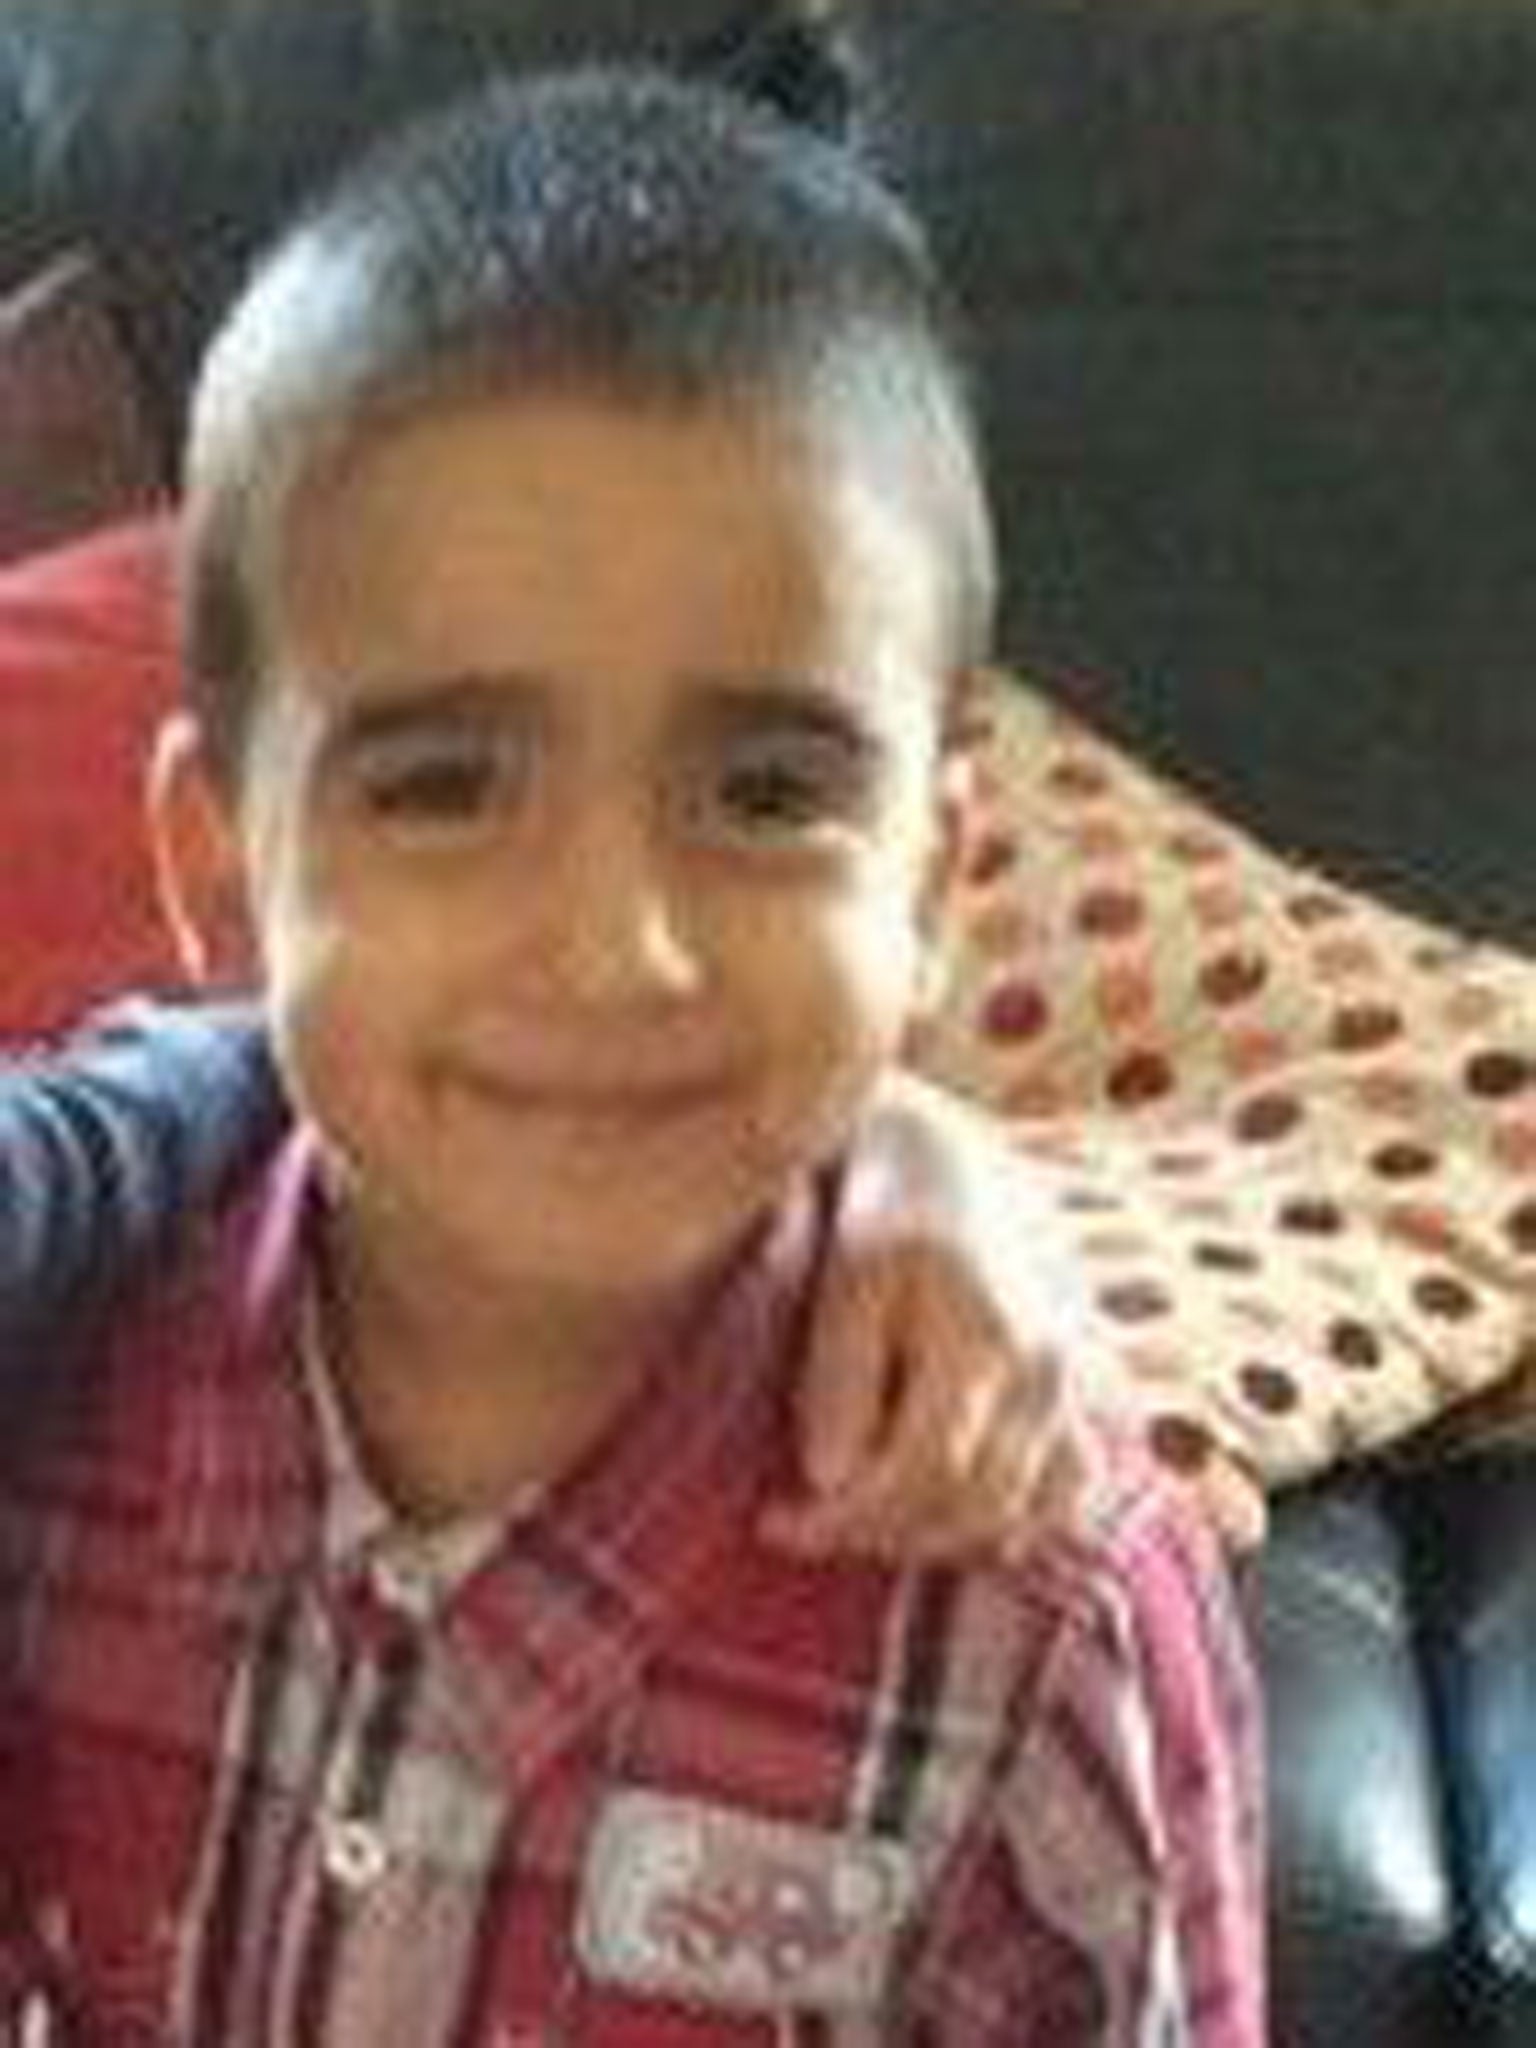 A police handout of missing three-year-old Mikaeel-Kular